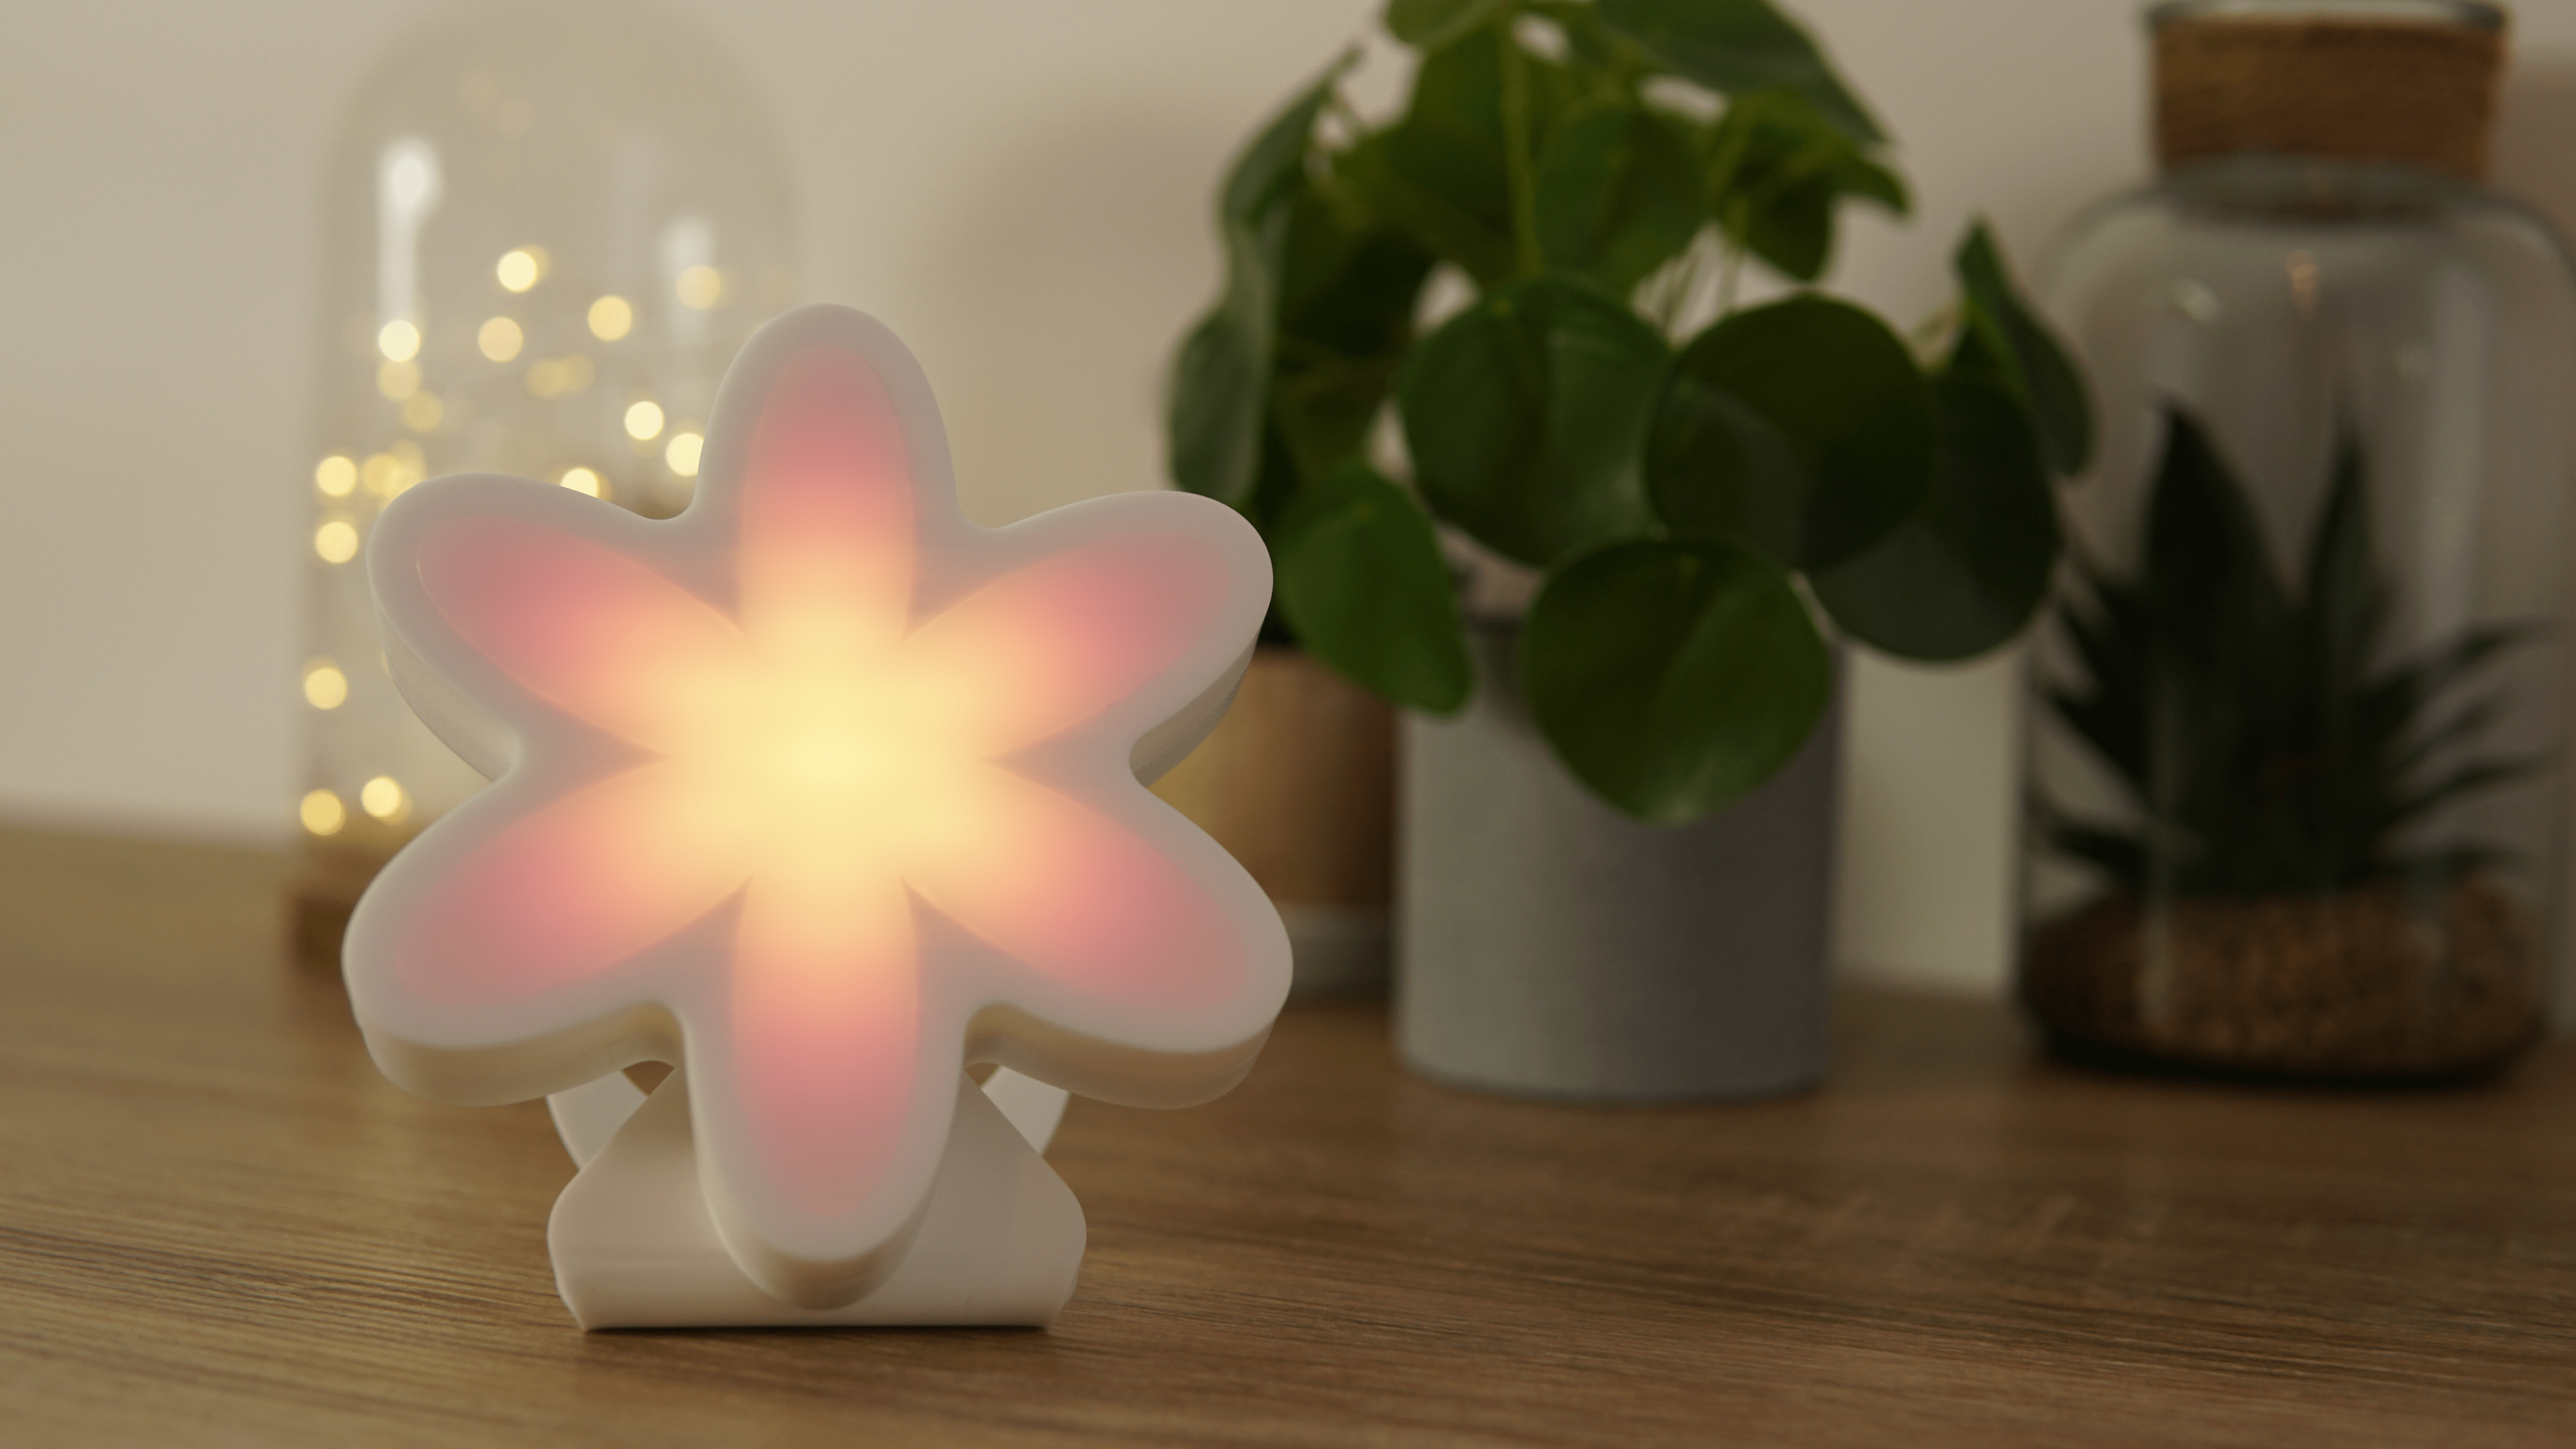 Flower, guide de respiration lumineux d'Ullo